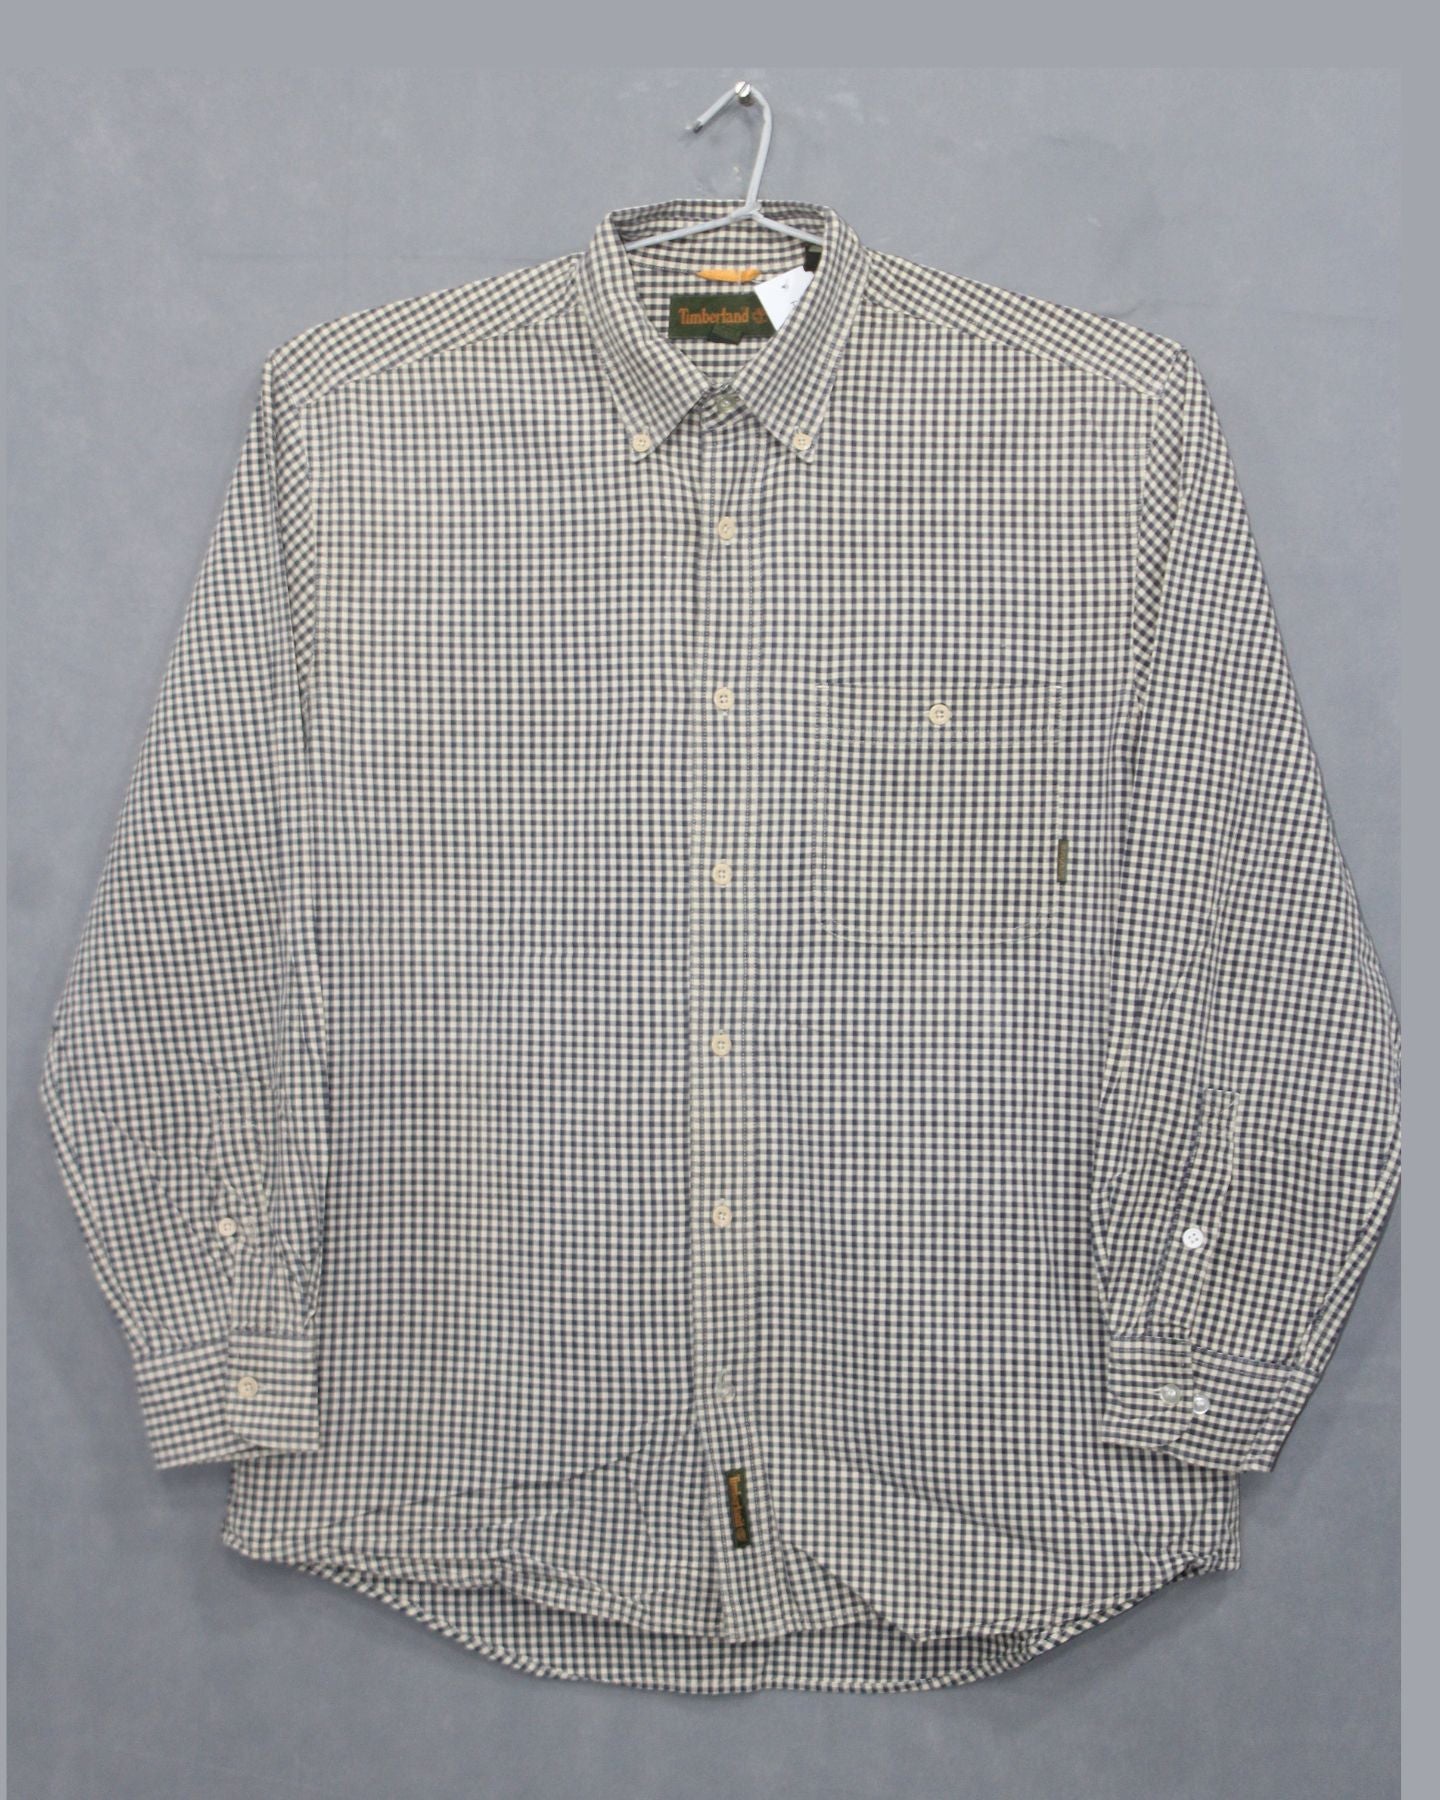 Timberland Branded Original Cotton Shirt For Men